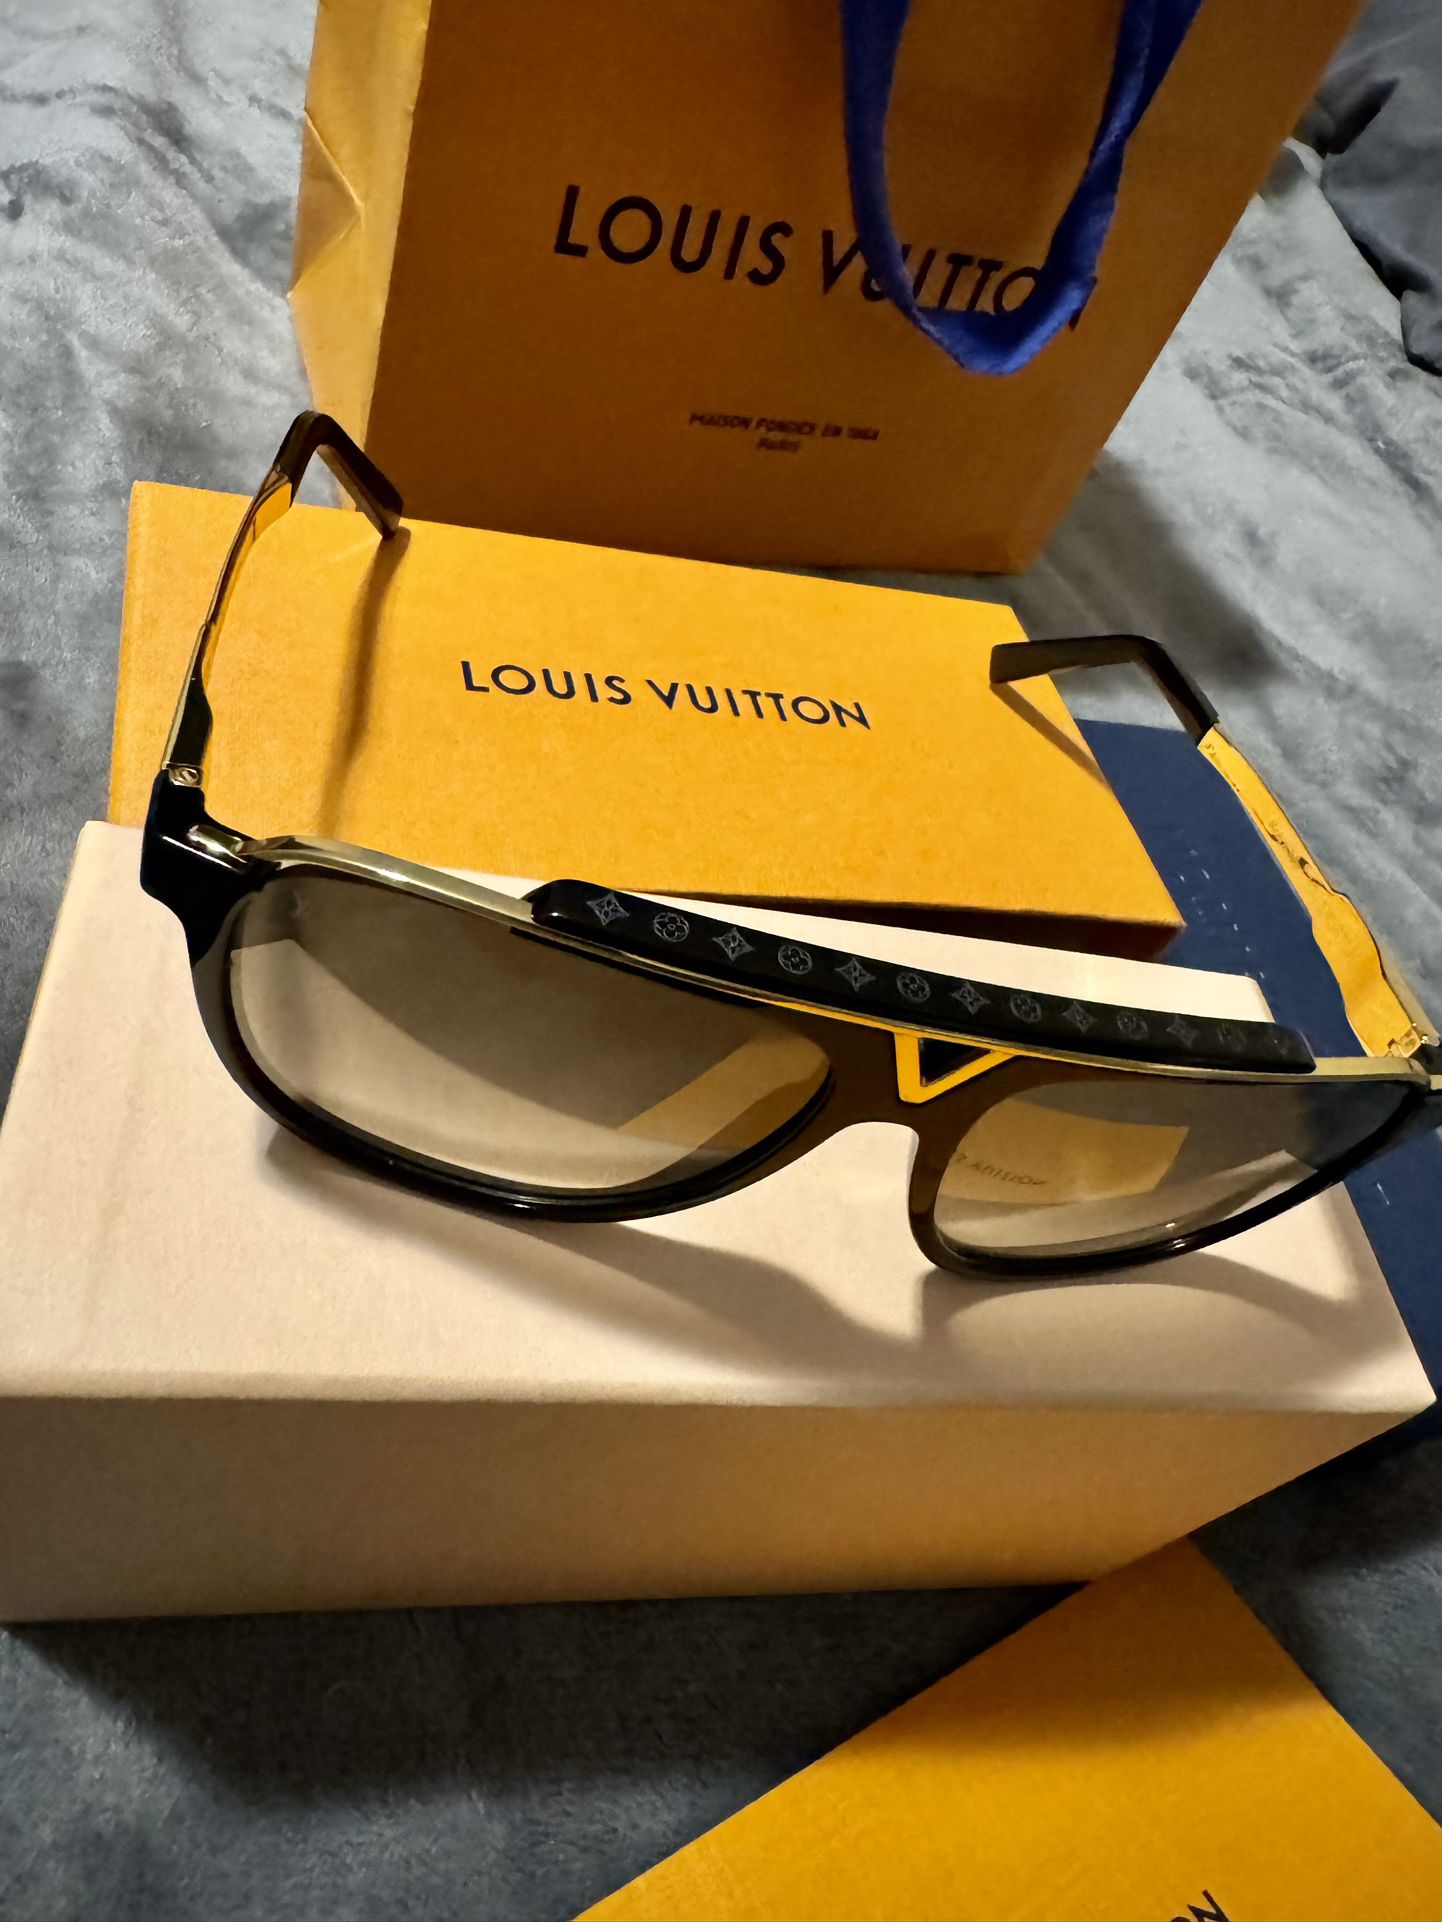 MOM SALE! Original LV Sunglasses in Black Gold Hardware Box Gift Bag in Great Condition